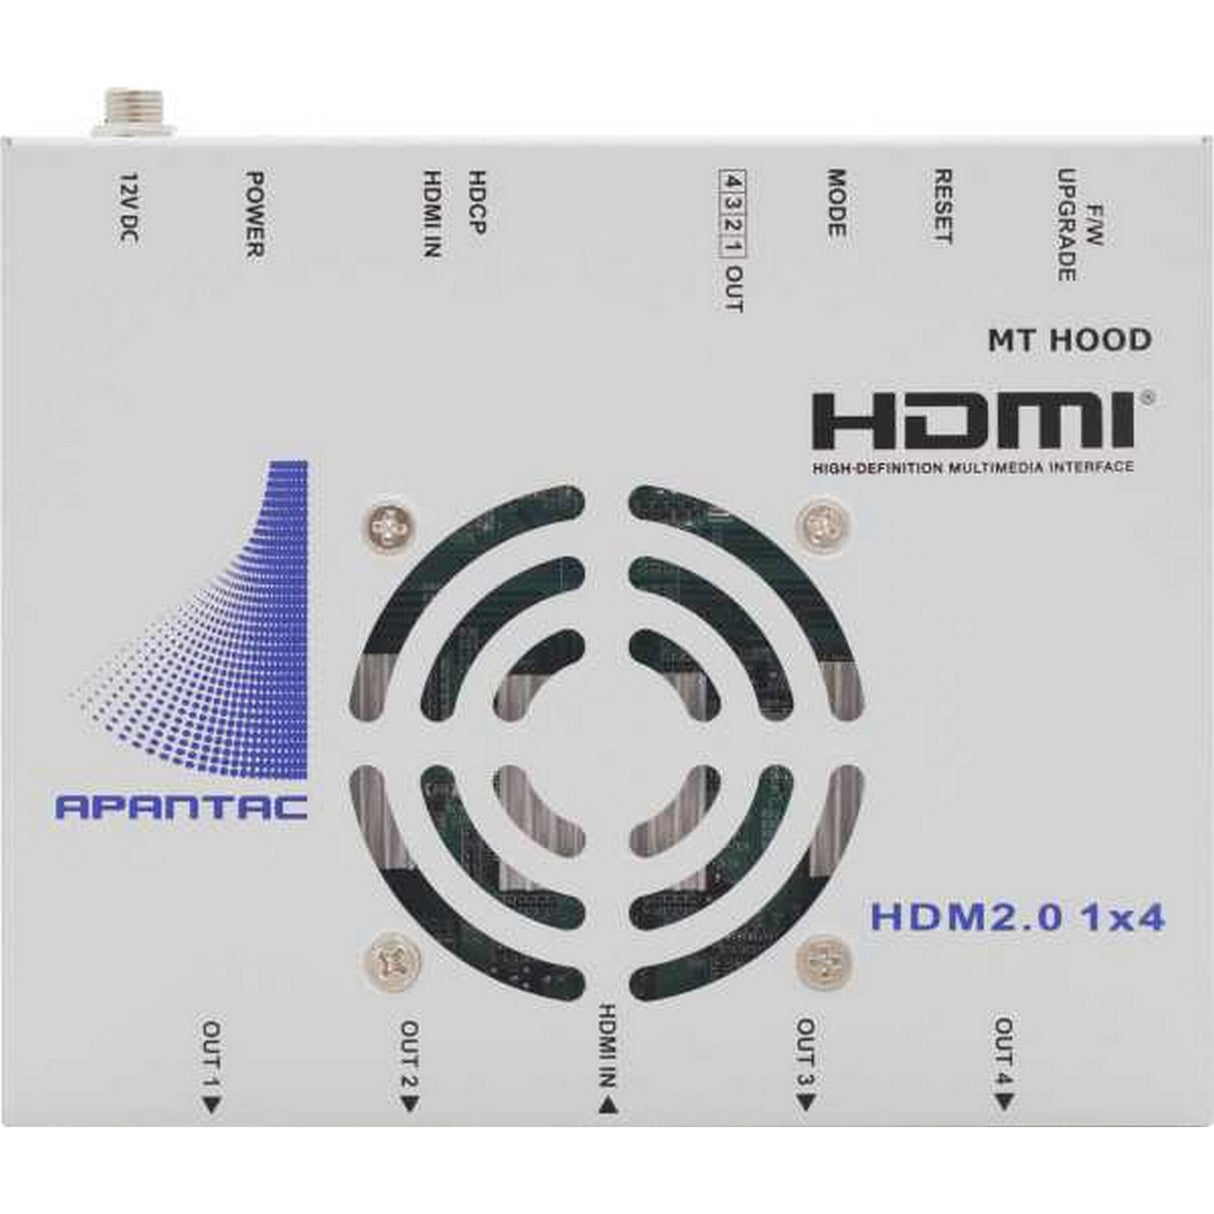 Apantac HDM2.0-1x4-II 1 x 4 HDMI 2.0 Splitter